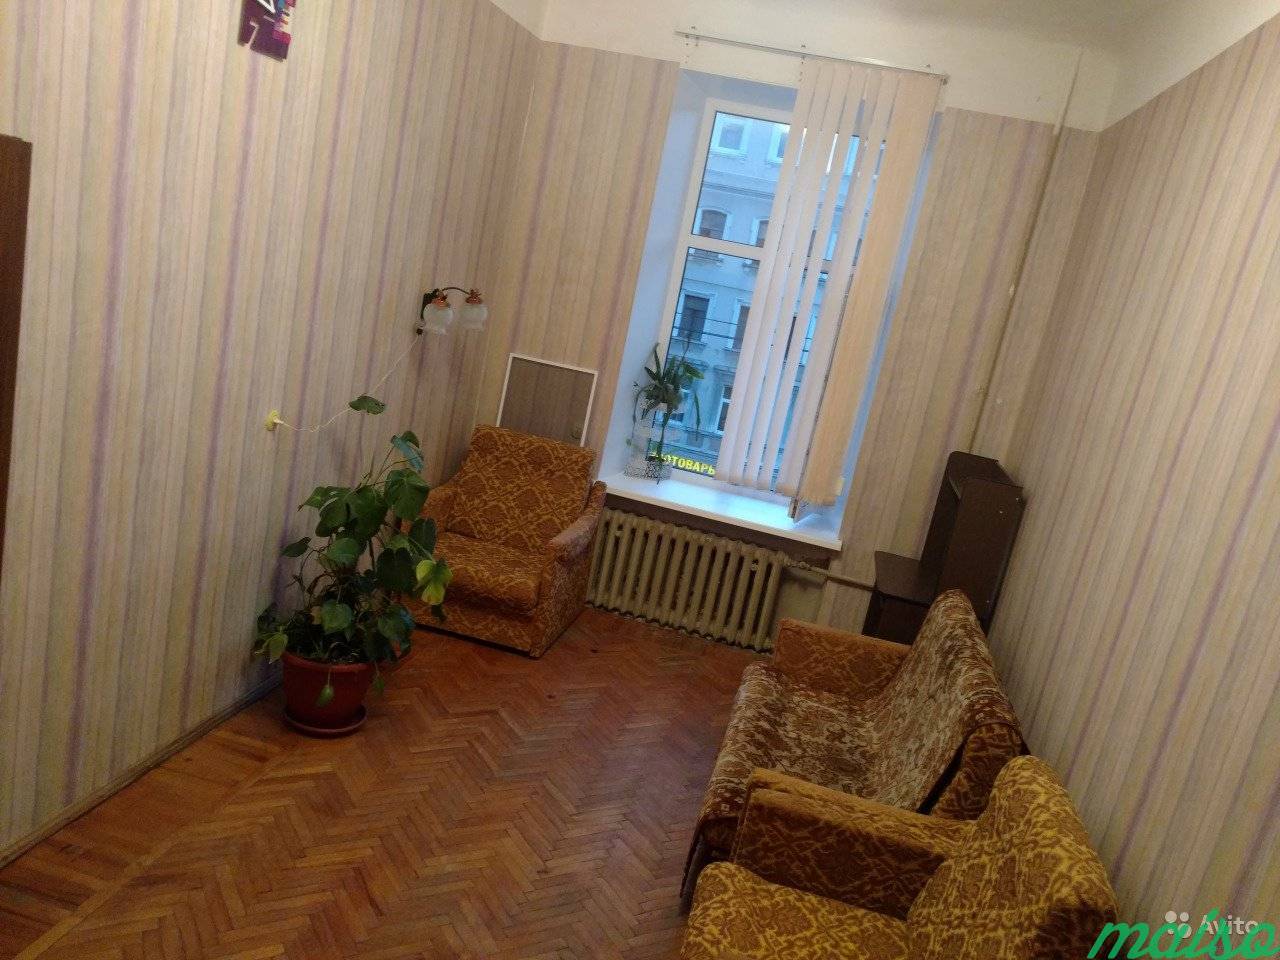 Комната 17 м² в 7-к, 3/3 эт. в Санкт-Петербурге. Фото 3